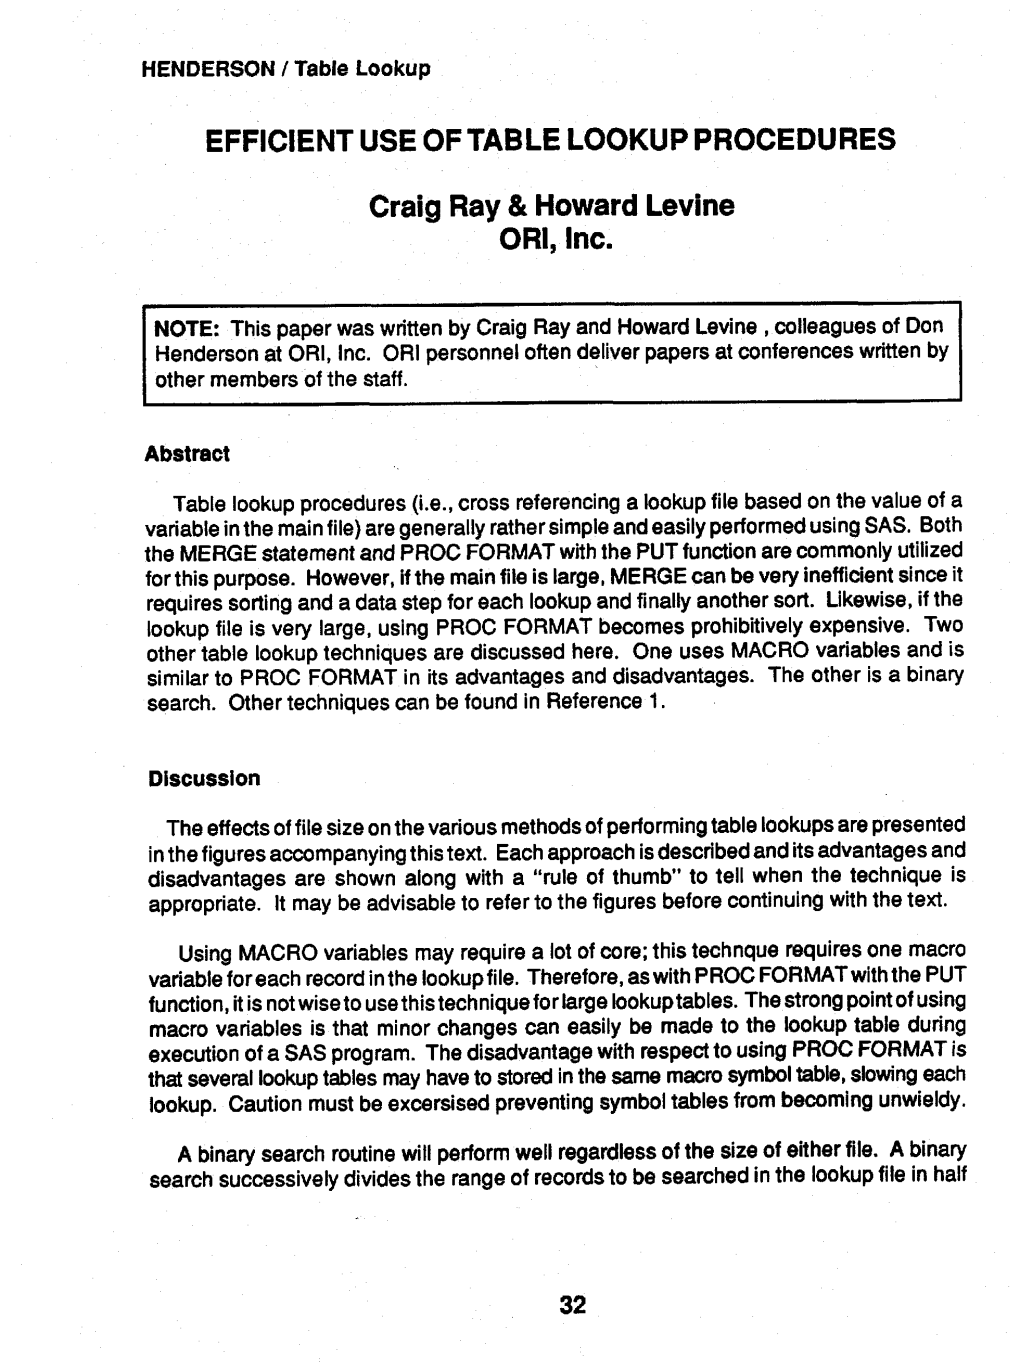 EFFICIENT USE of TABLE LOOKUP PROCEDURES Craig Ray & Howard Levine ORI, Inc